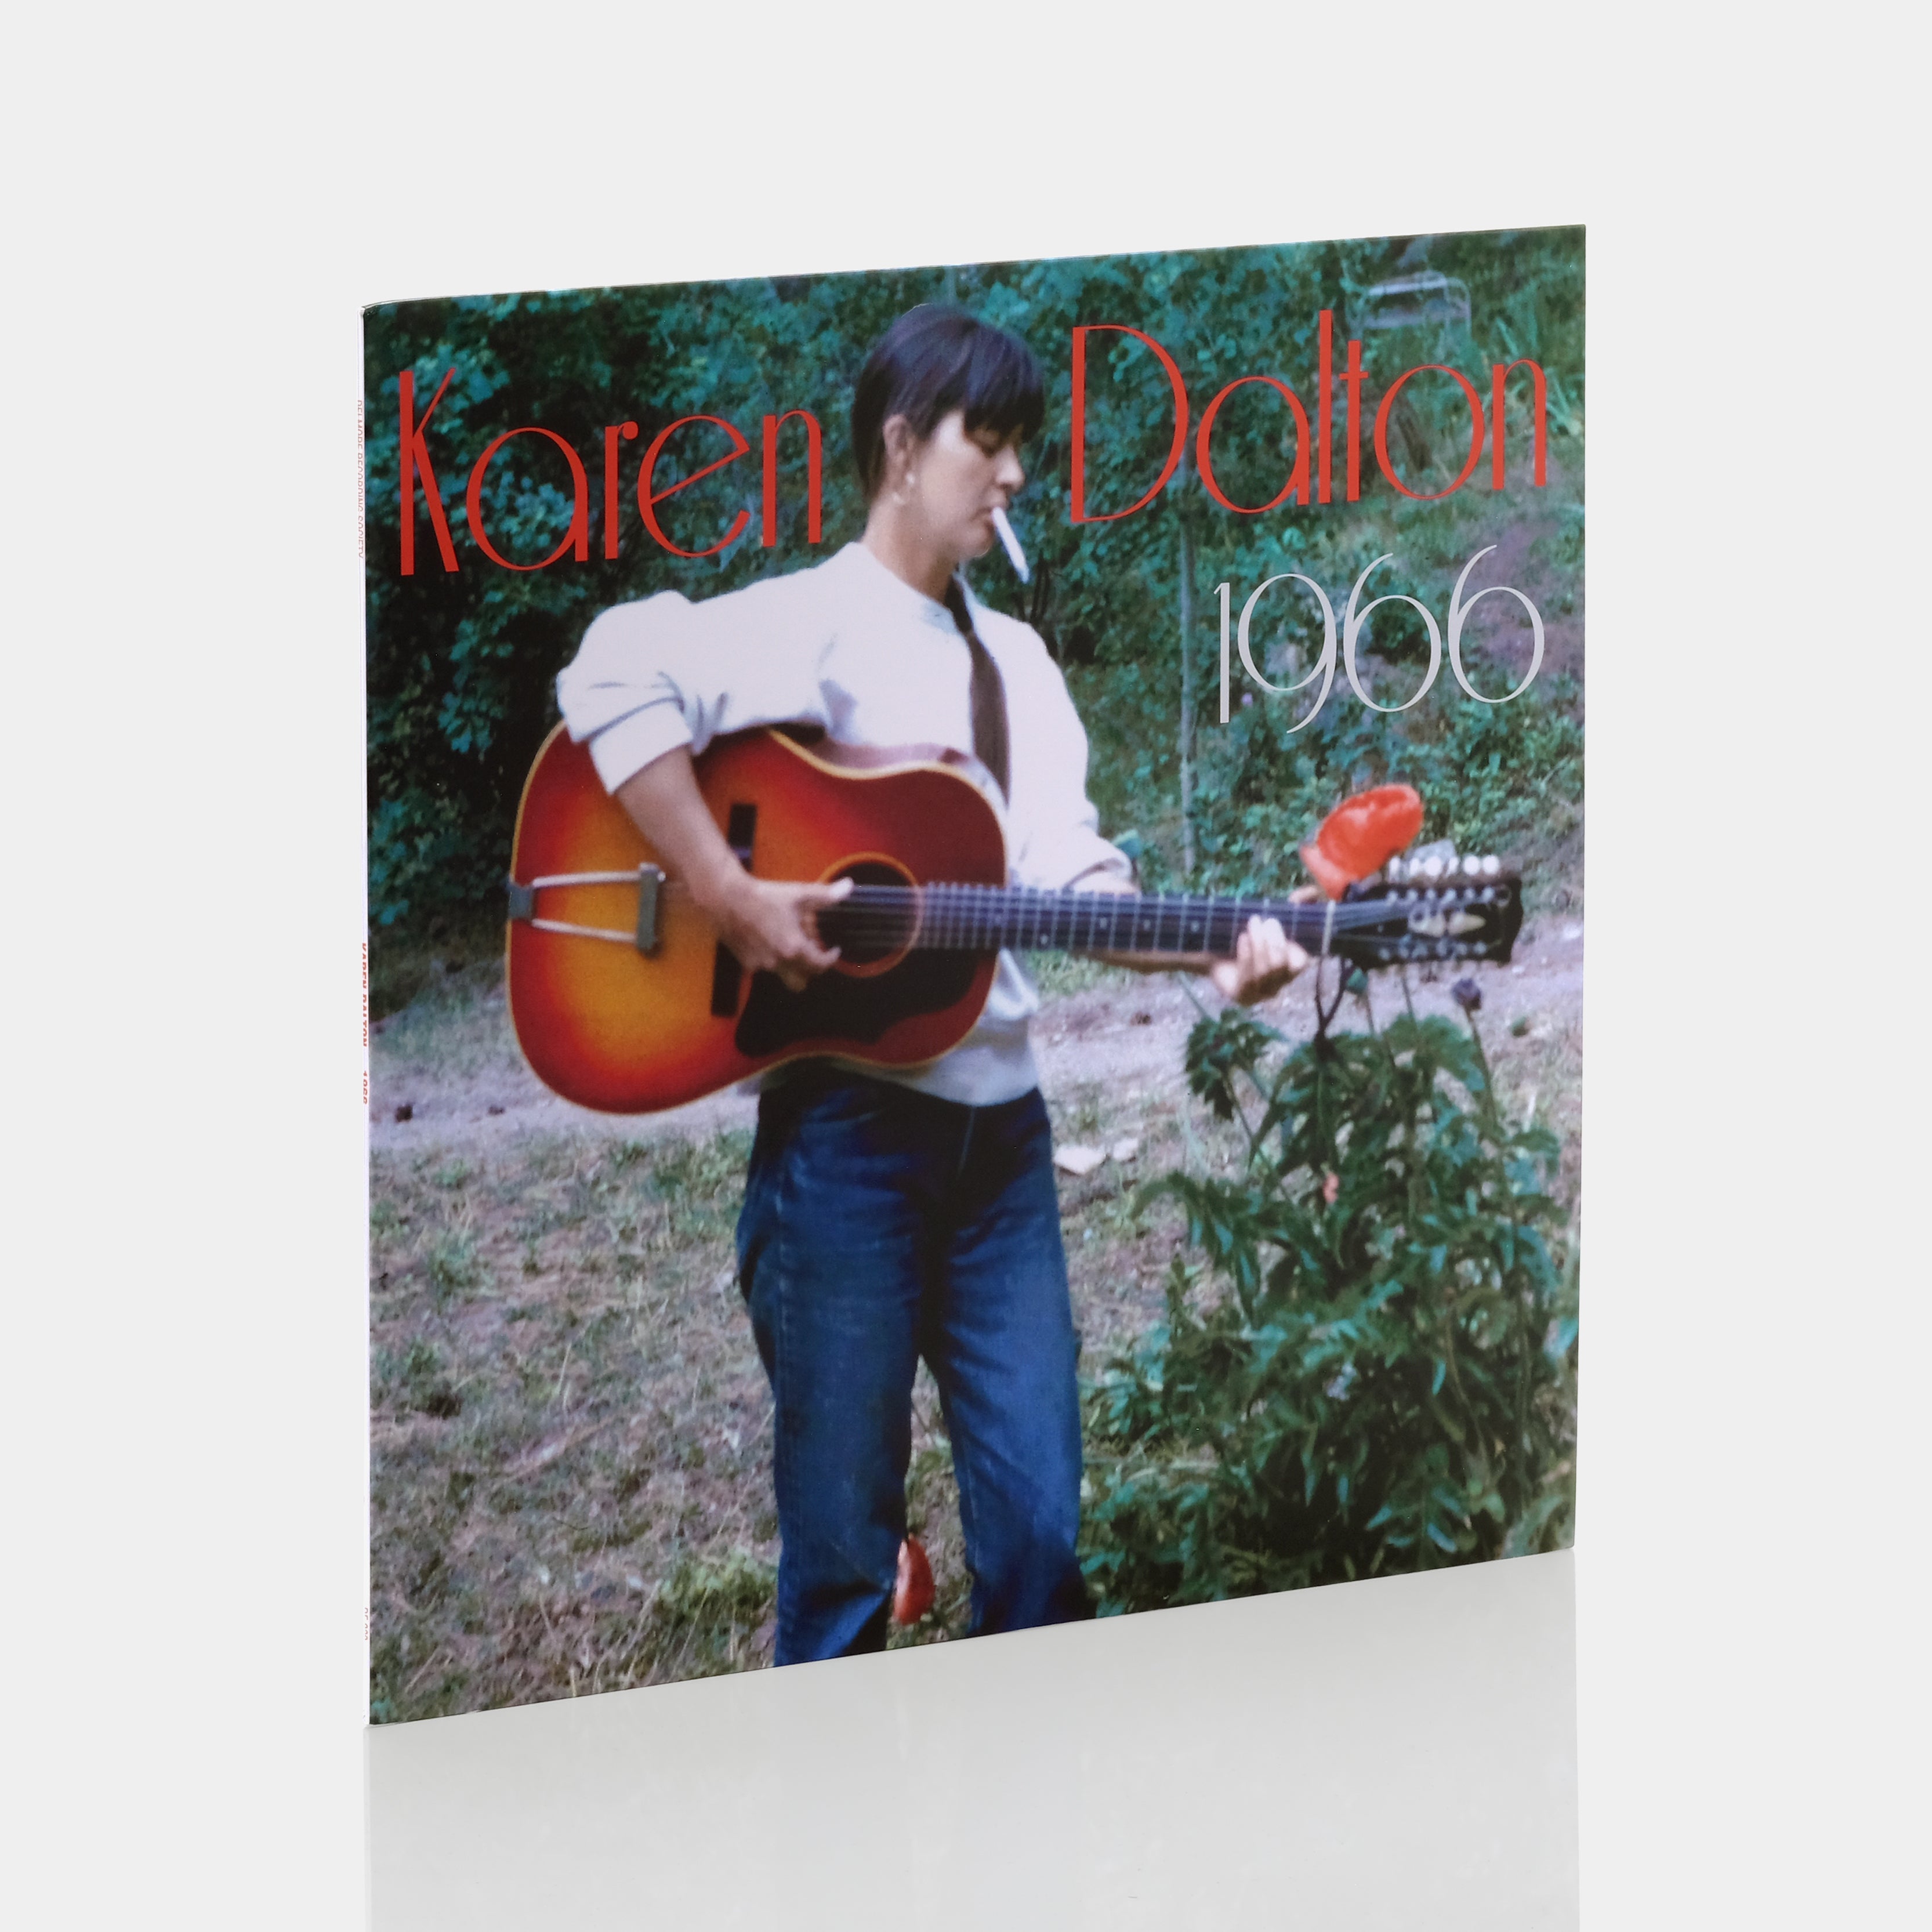 Karen Dalton - 1966 LP Clear Green Vinyl Record